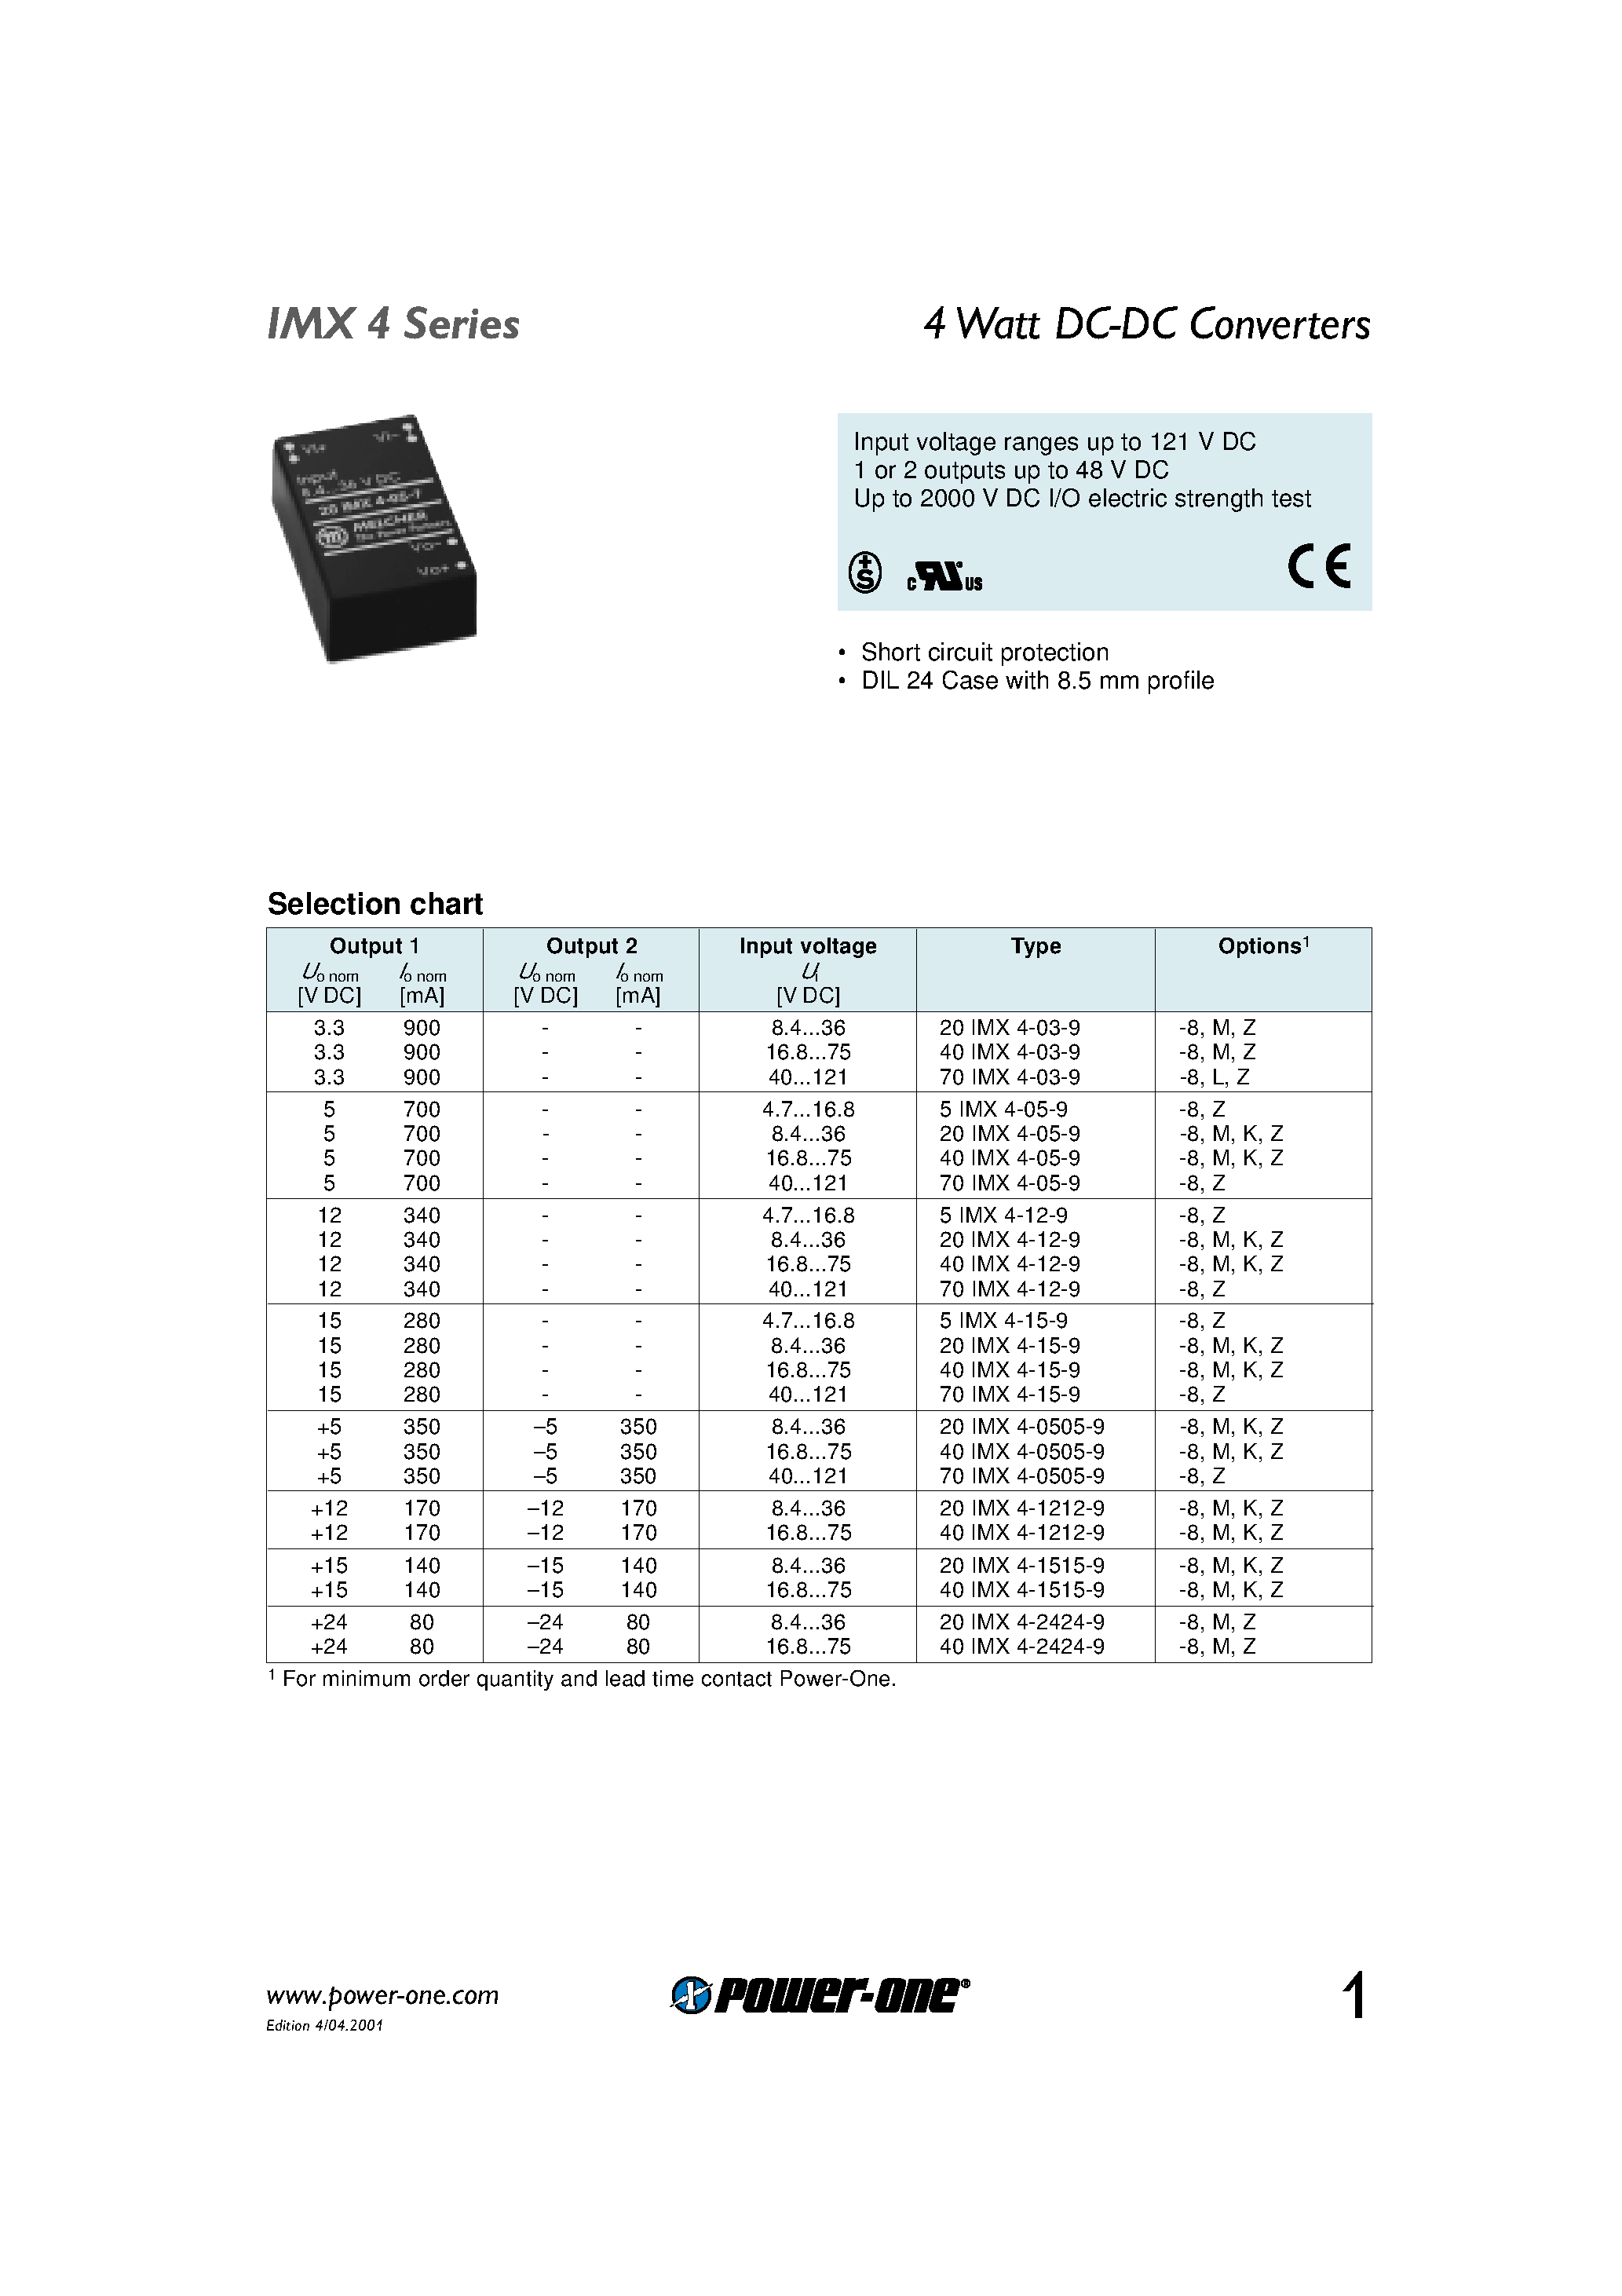 Даташит 5IMX4-12-9 - 4 Watt DC-DC Converters страница 1